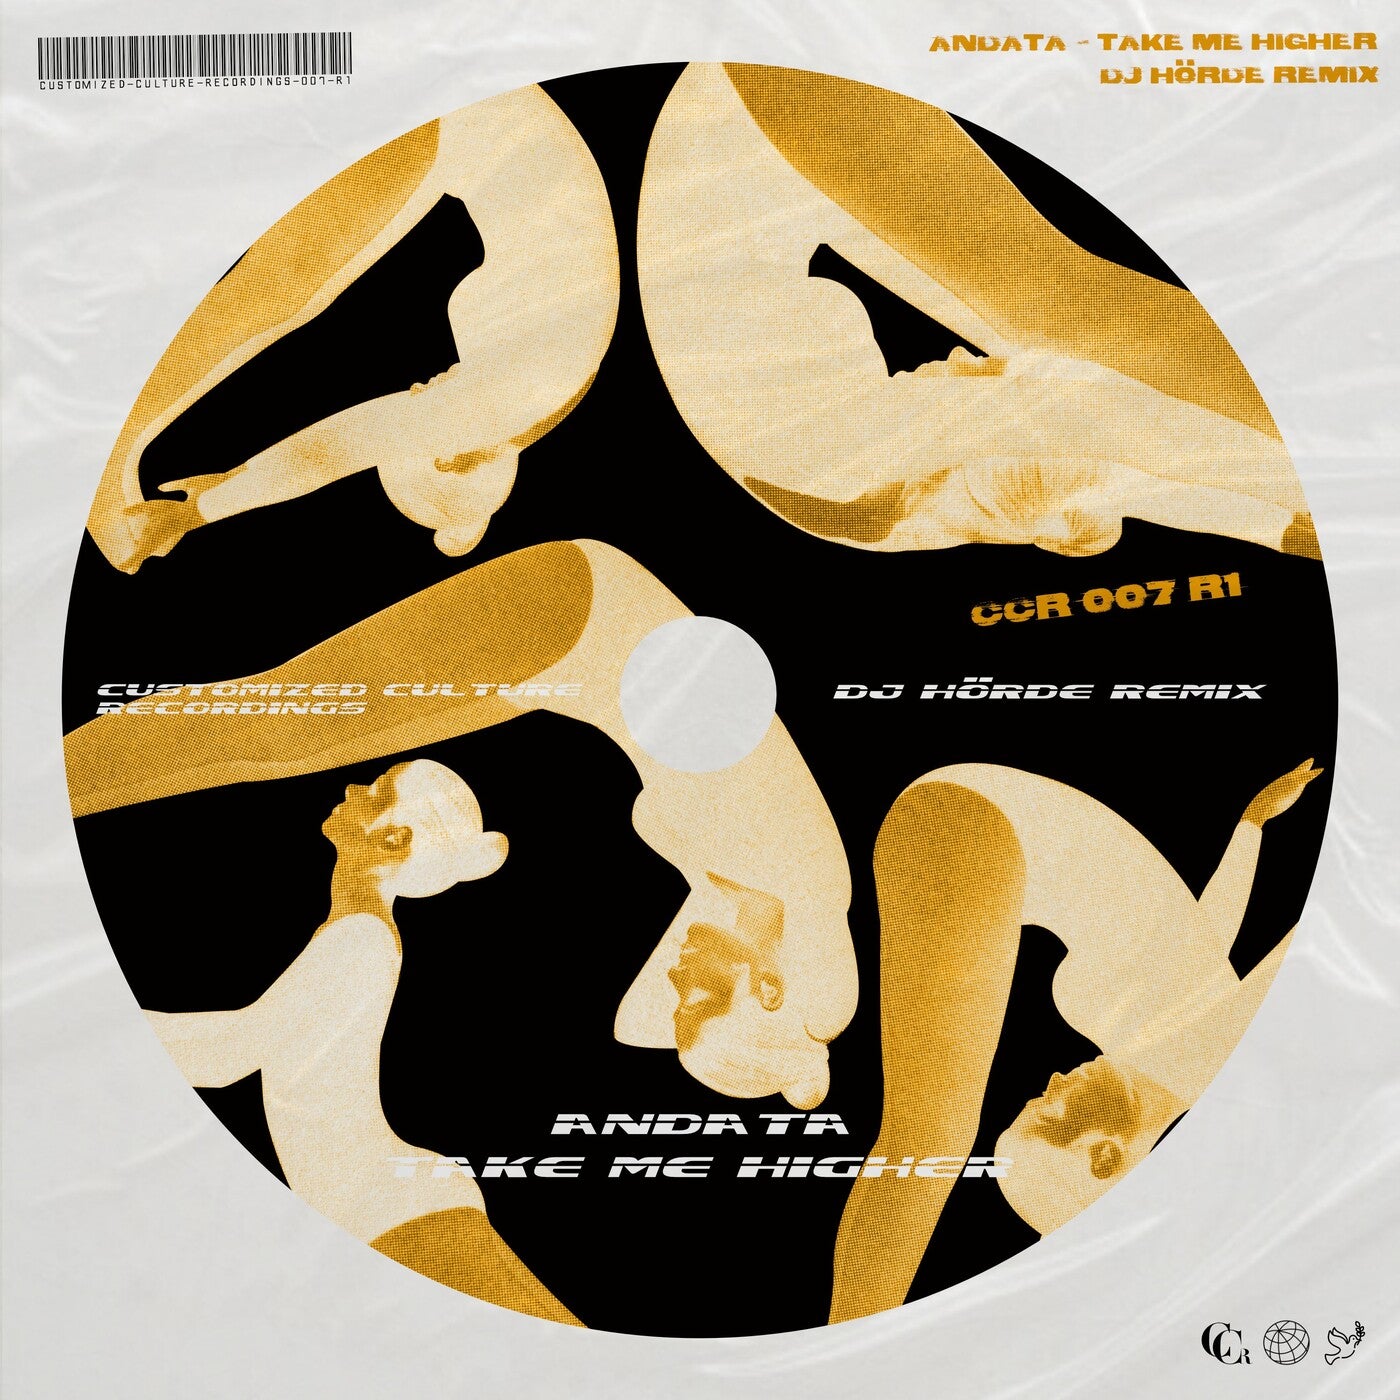 ANDATA - Take Me Higher (DJ HÖRDE Remix) [Customized Culture